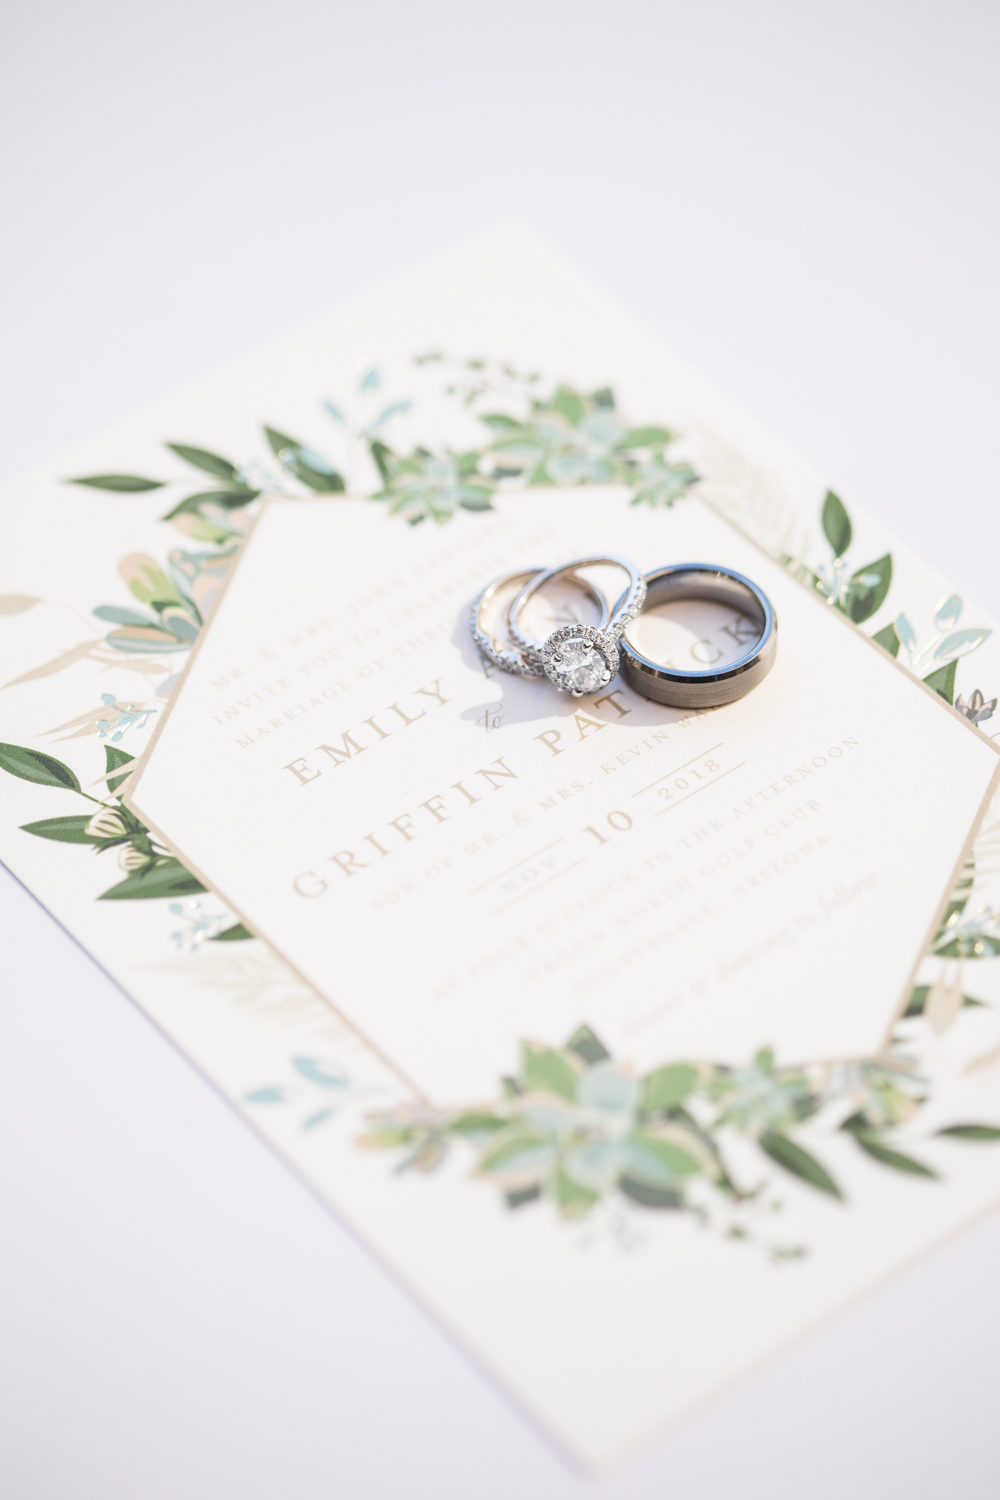 minted wedding invitation ring shot